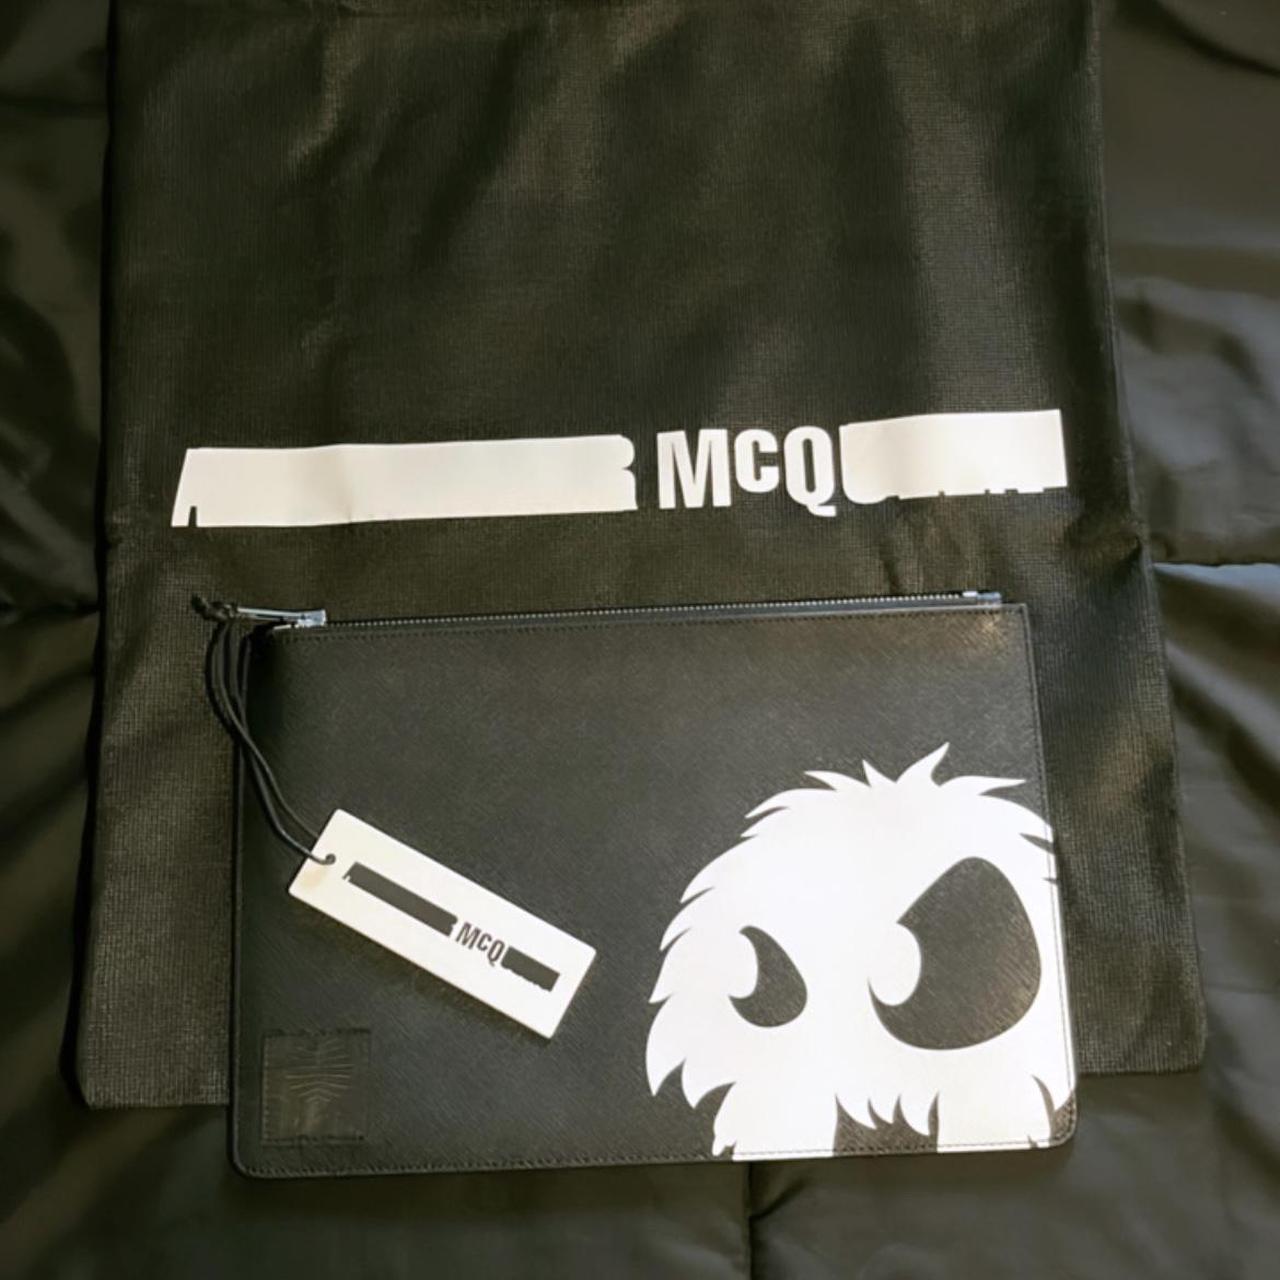 McQ Alexander McQueen Men's Black and White Bag (4)